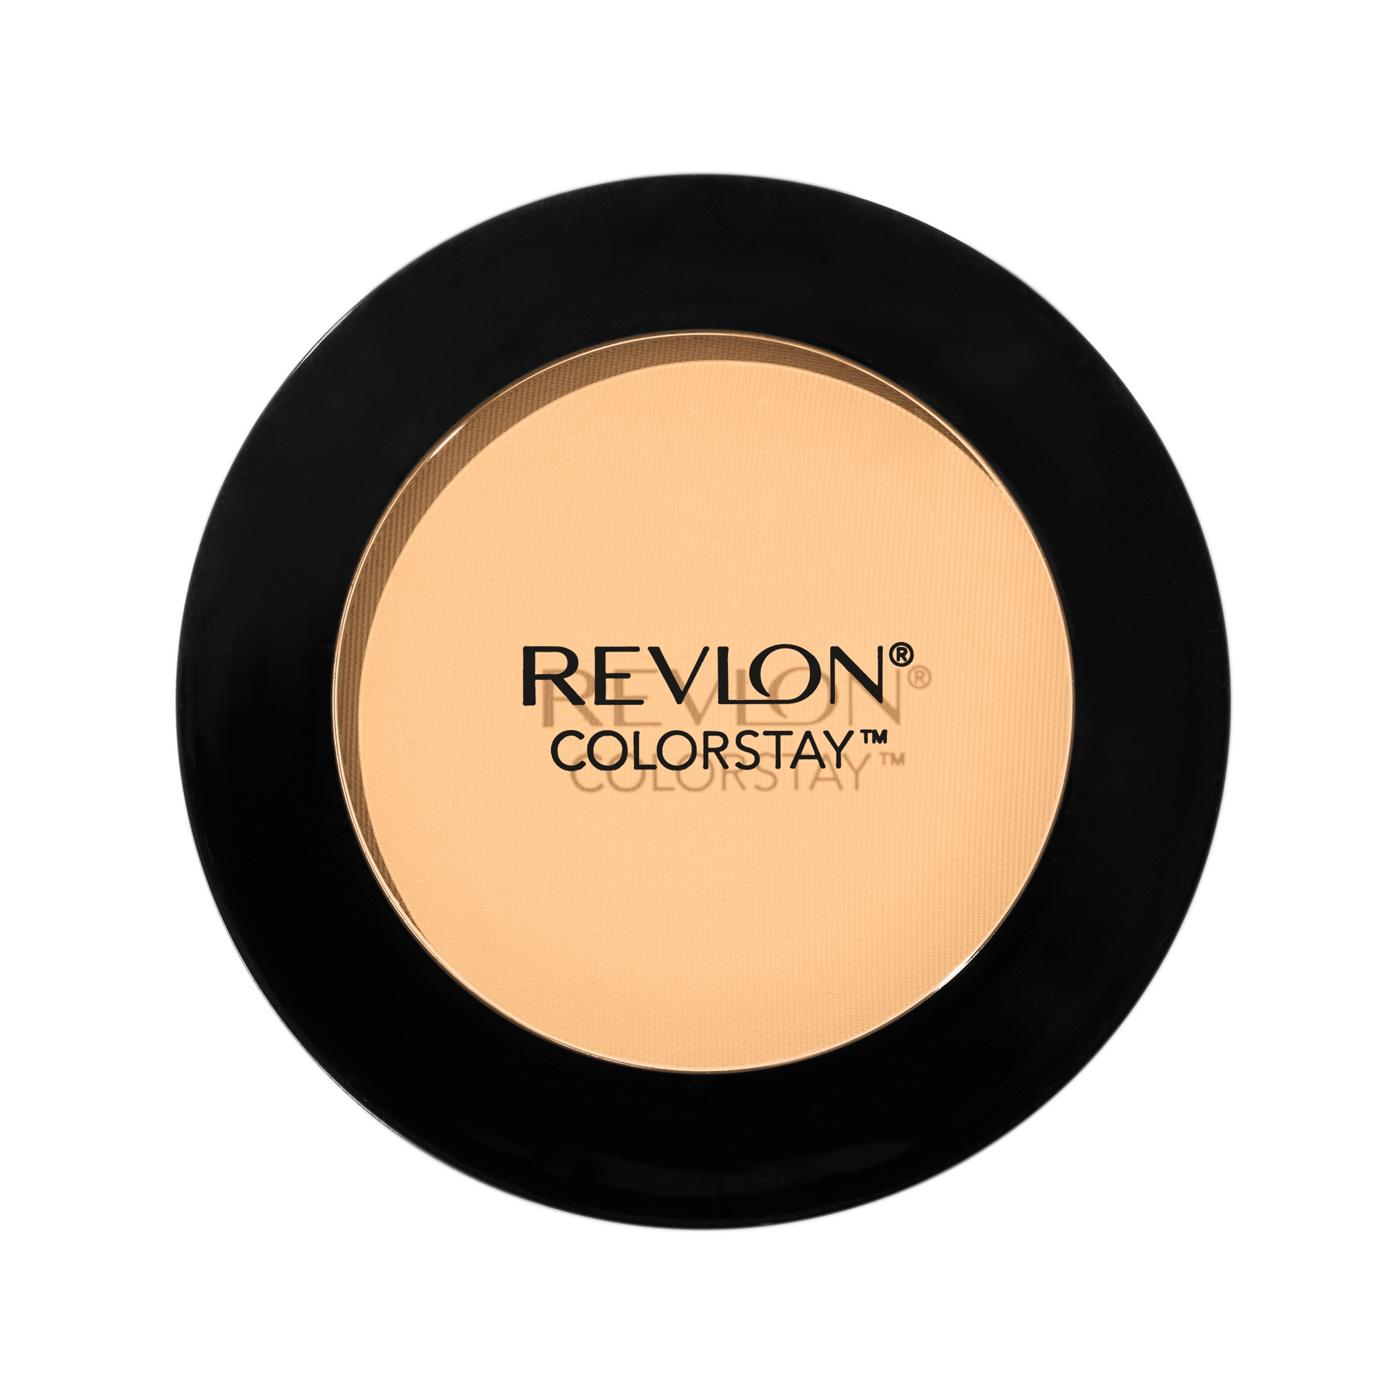 Revlon ColorStay Pressed Powder - Nature Ochre; image 1 of 5